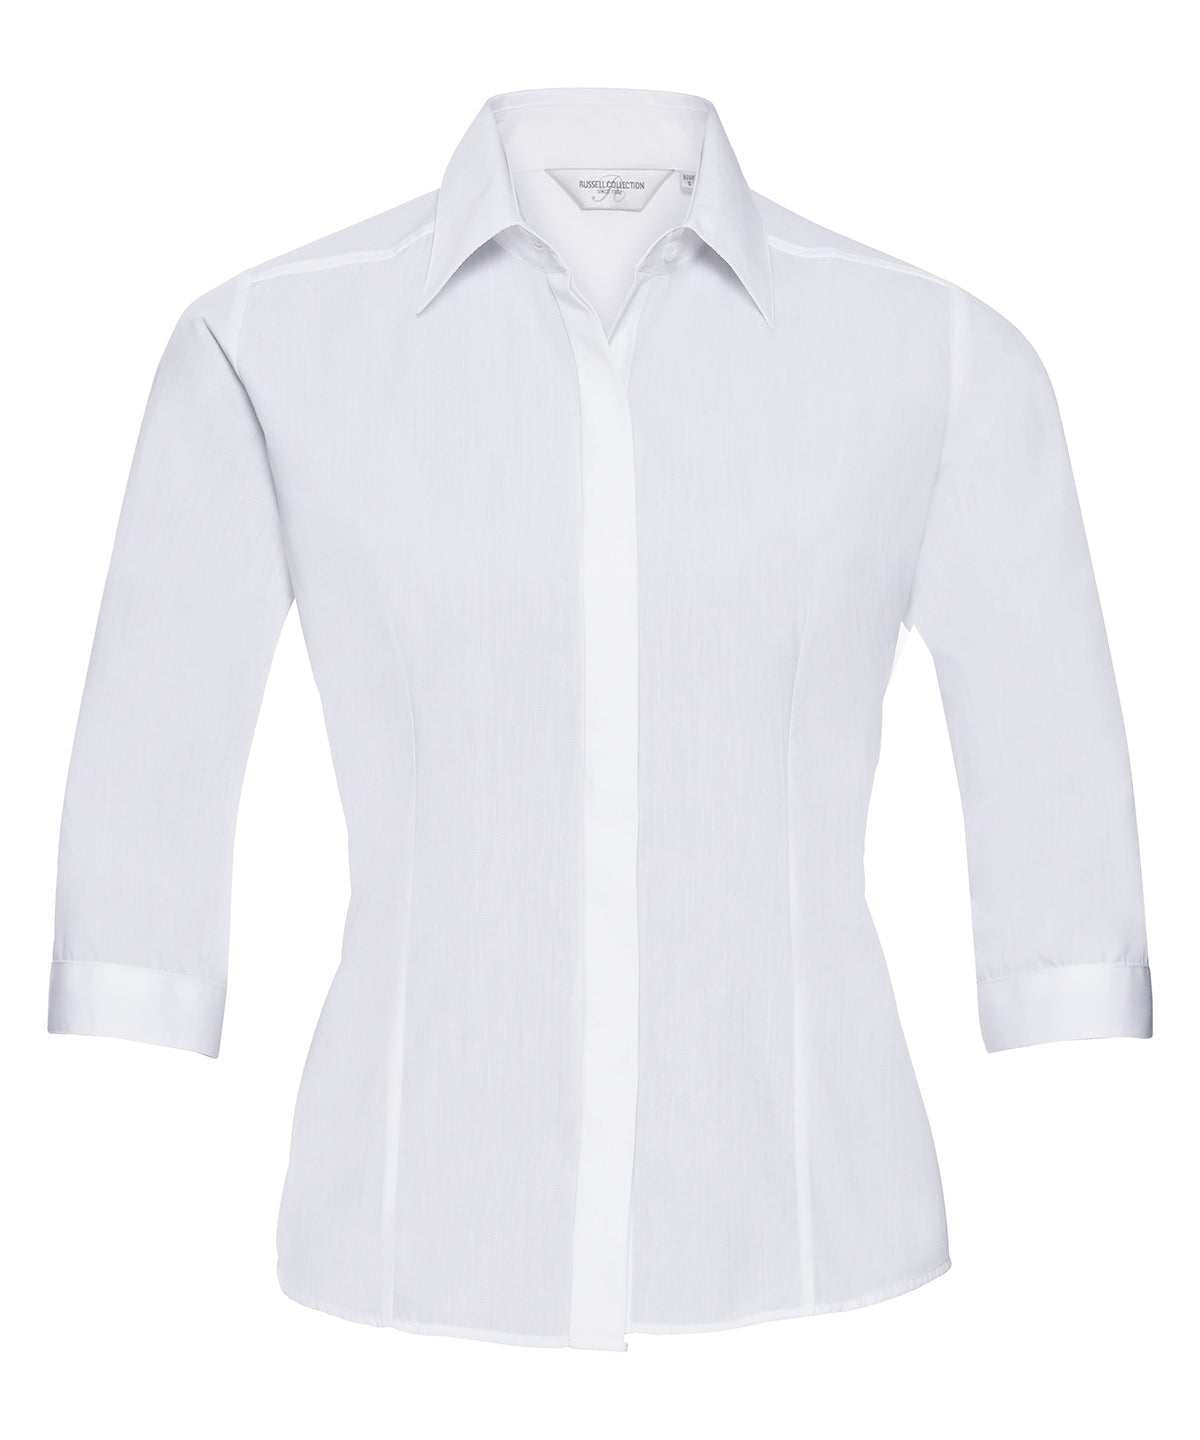 Bolir - Women's ¾ Sleeve Polycotton Easycare Fitted Poplin Shirt